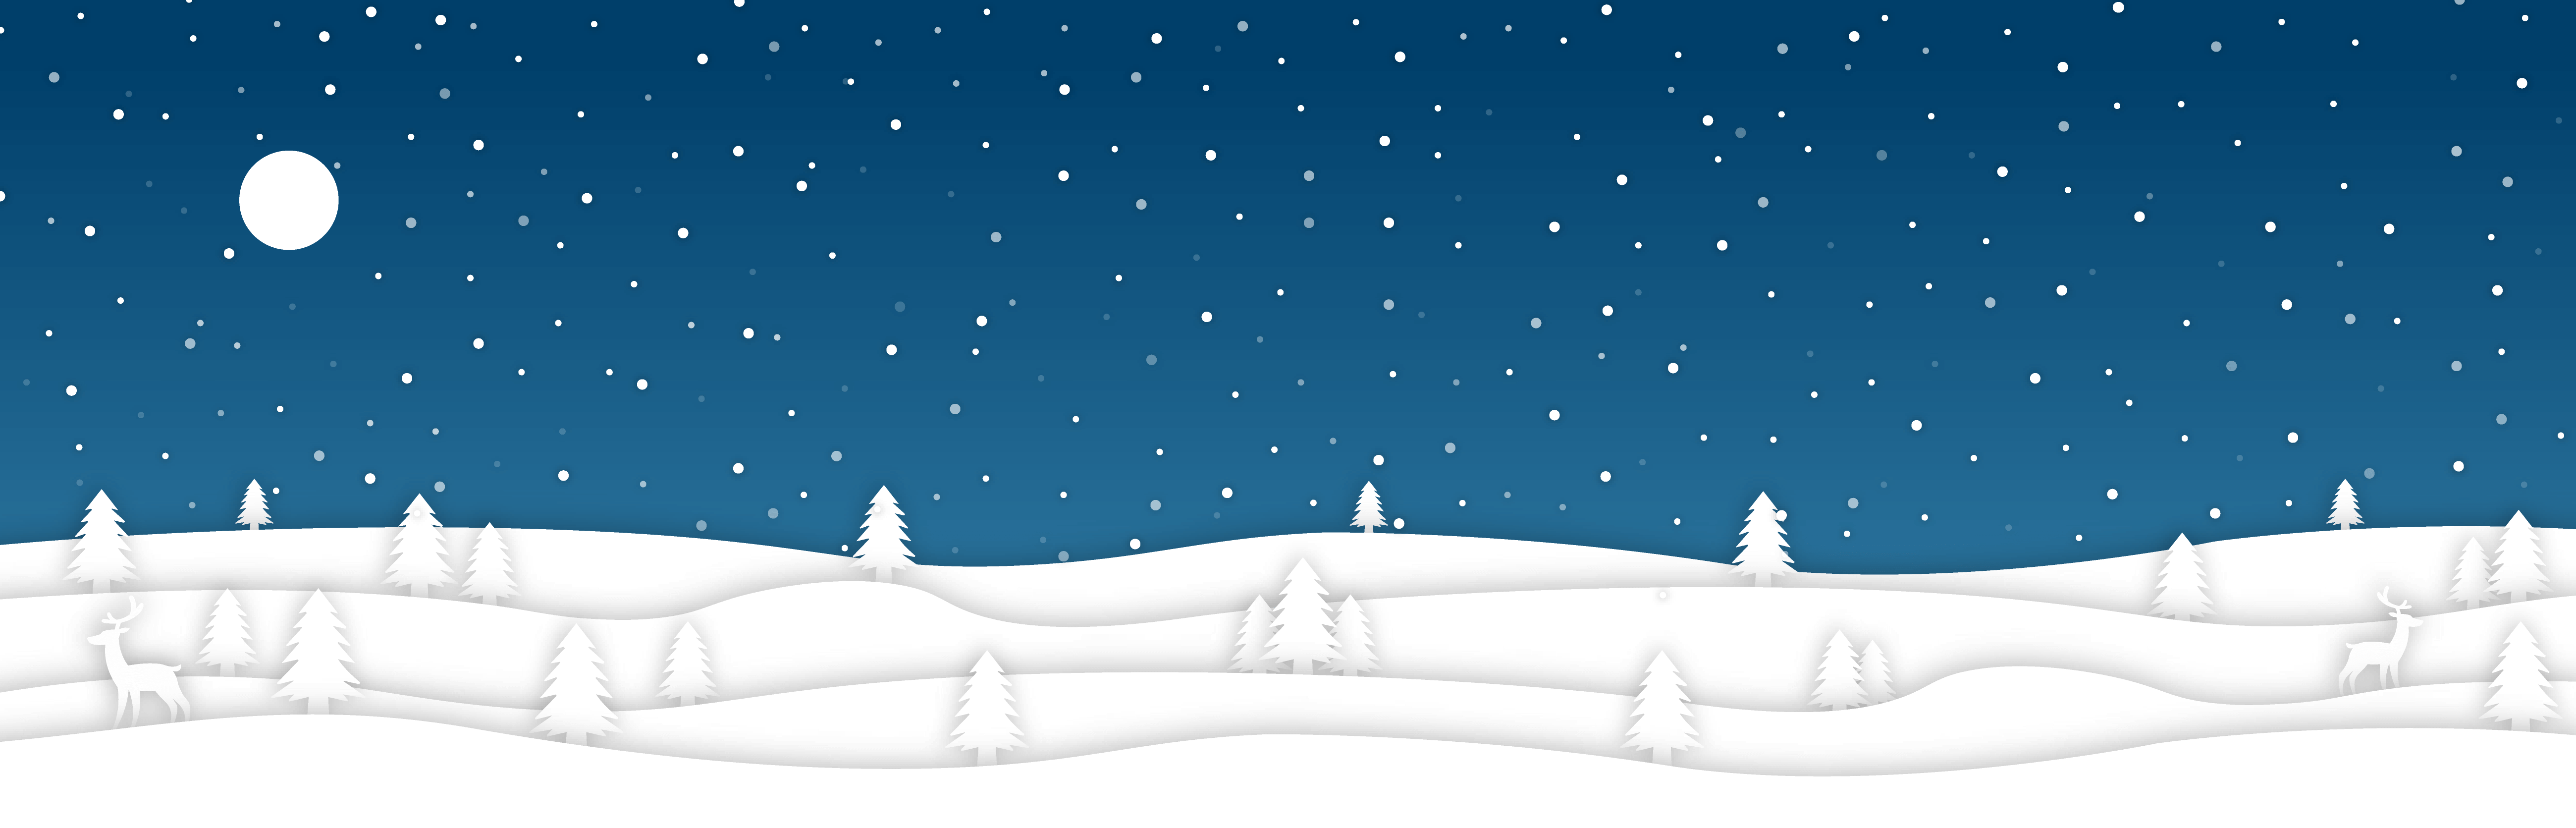 Christmas portal background - snow scene